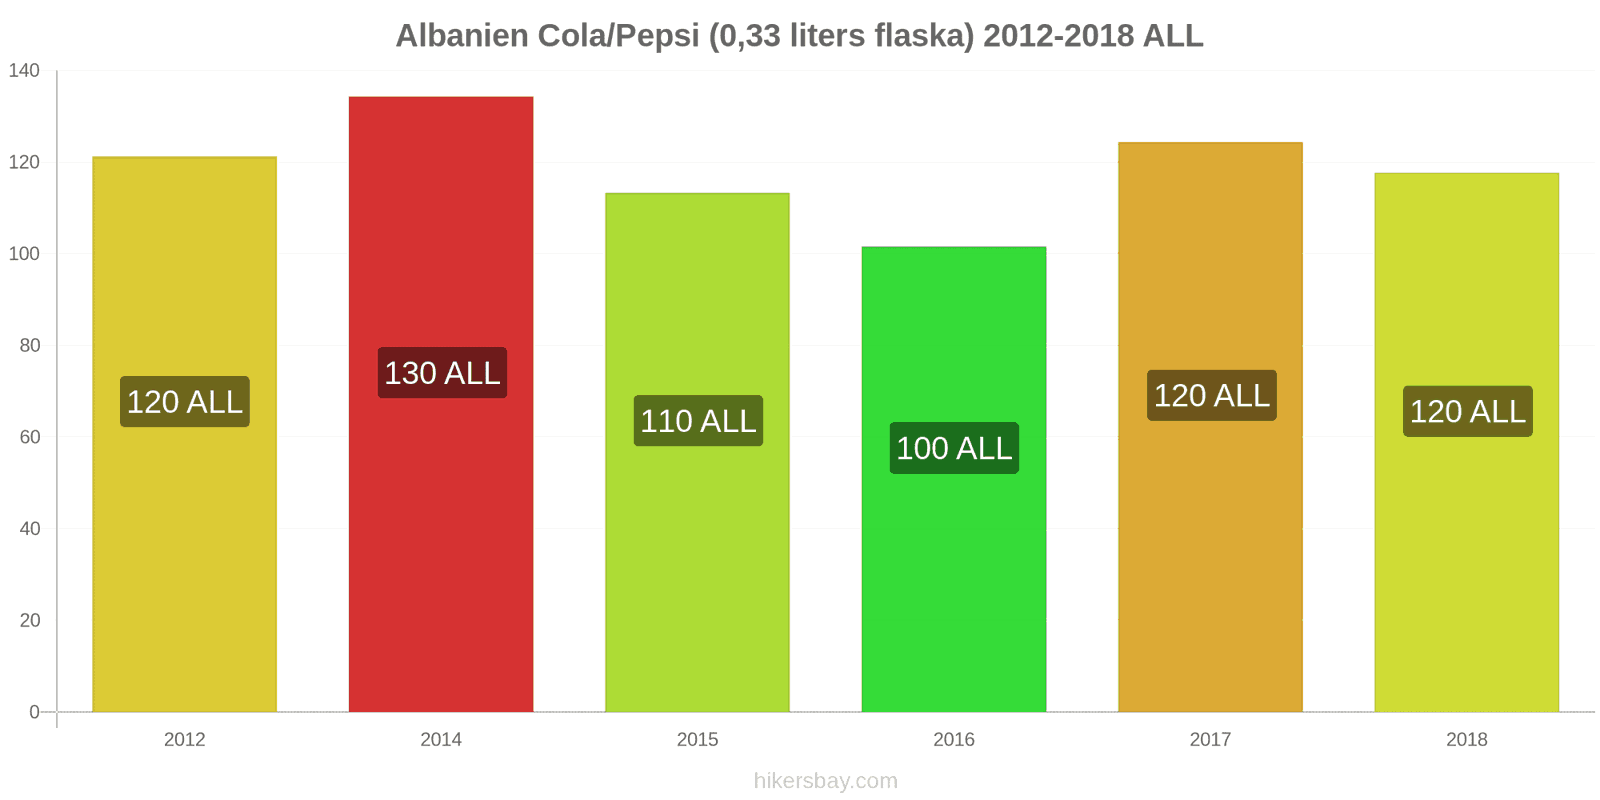 Albanien prisändringar Coca-Cola/Pepsi (0.33 liters flaska) hikersbay.com